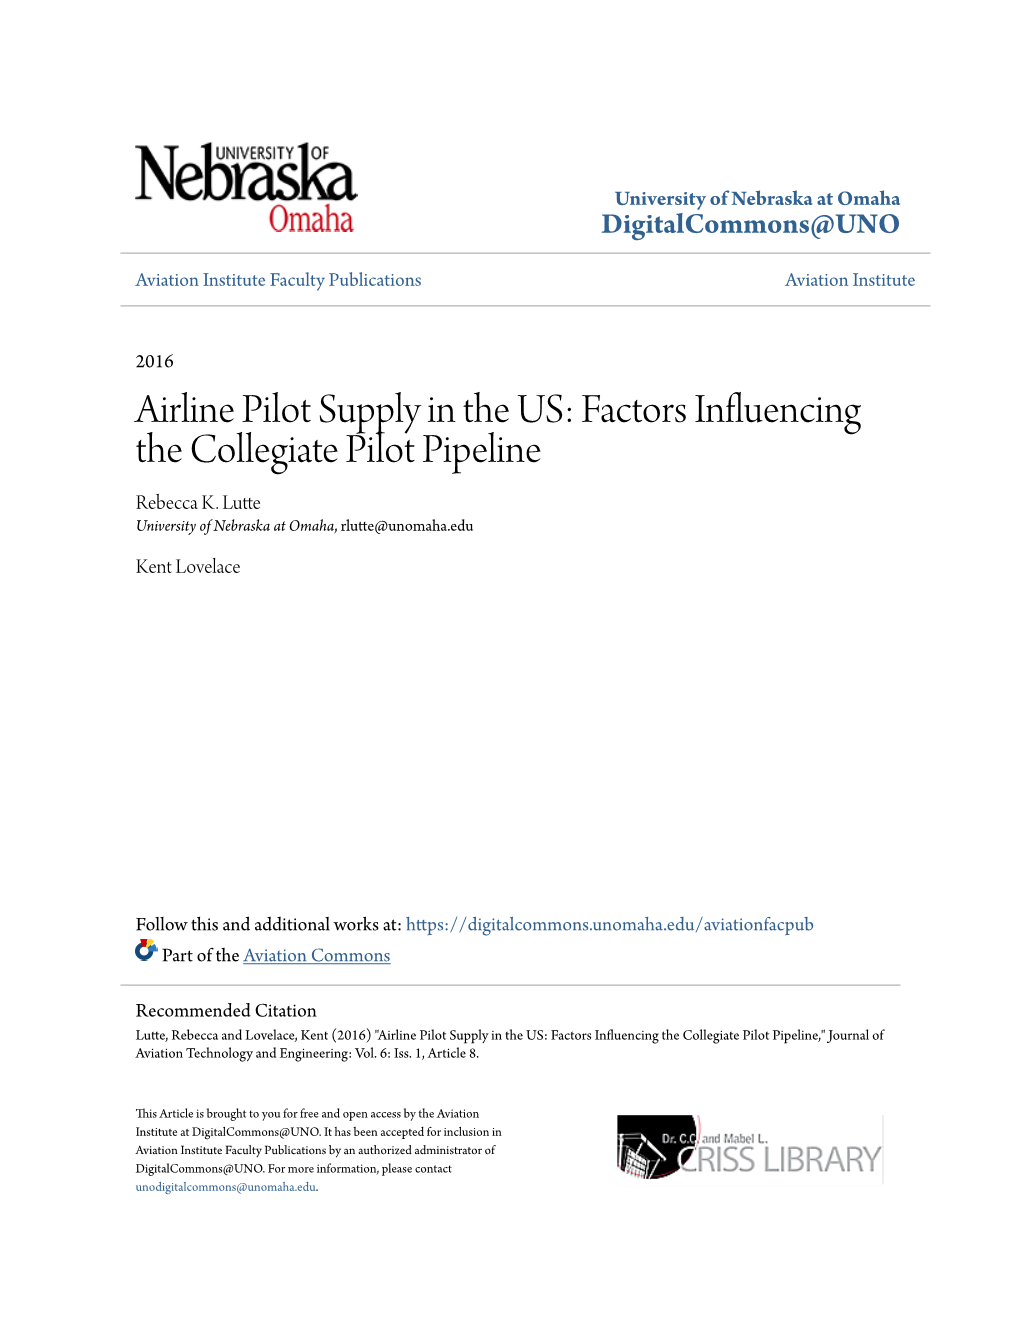 Factors Influencing the Collegiate Pilot Pipeline Rebecca K